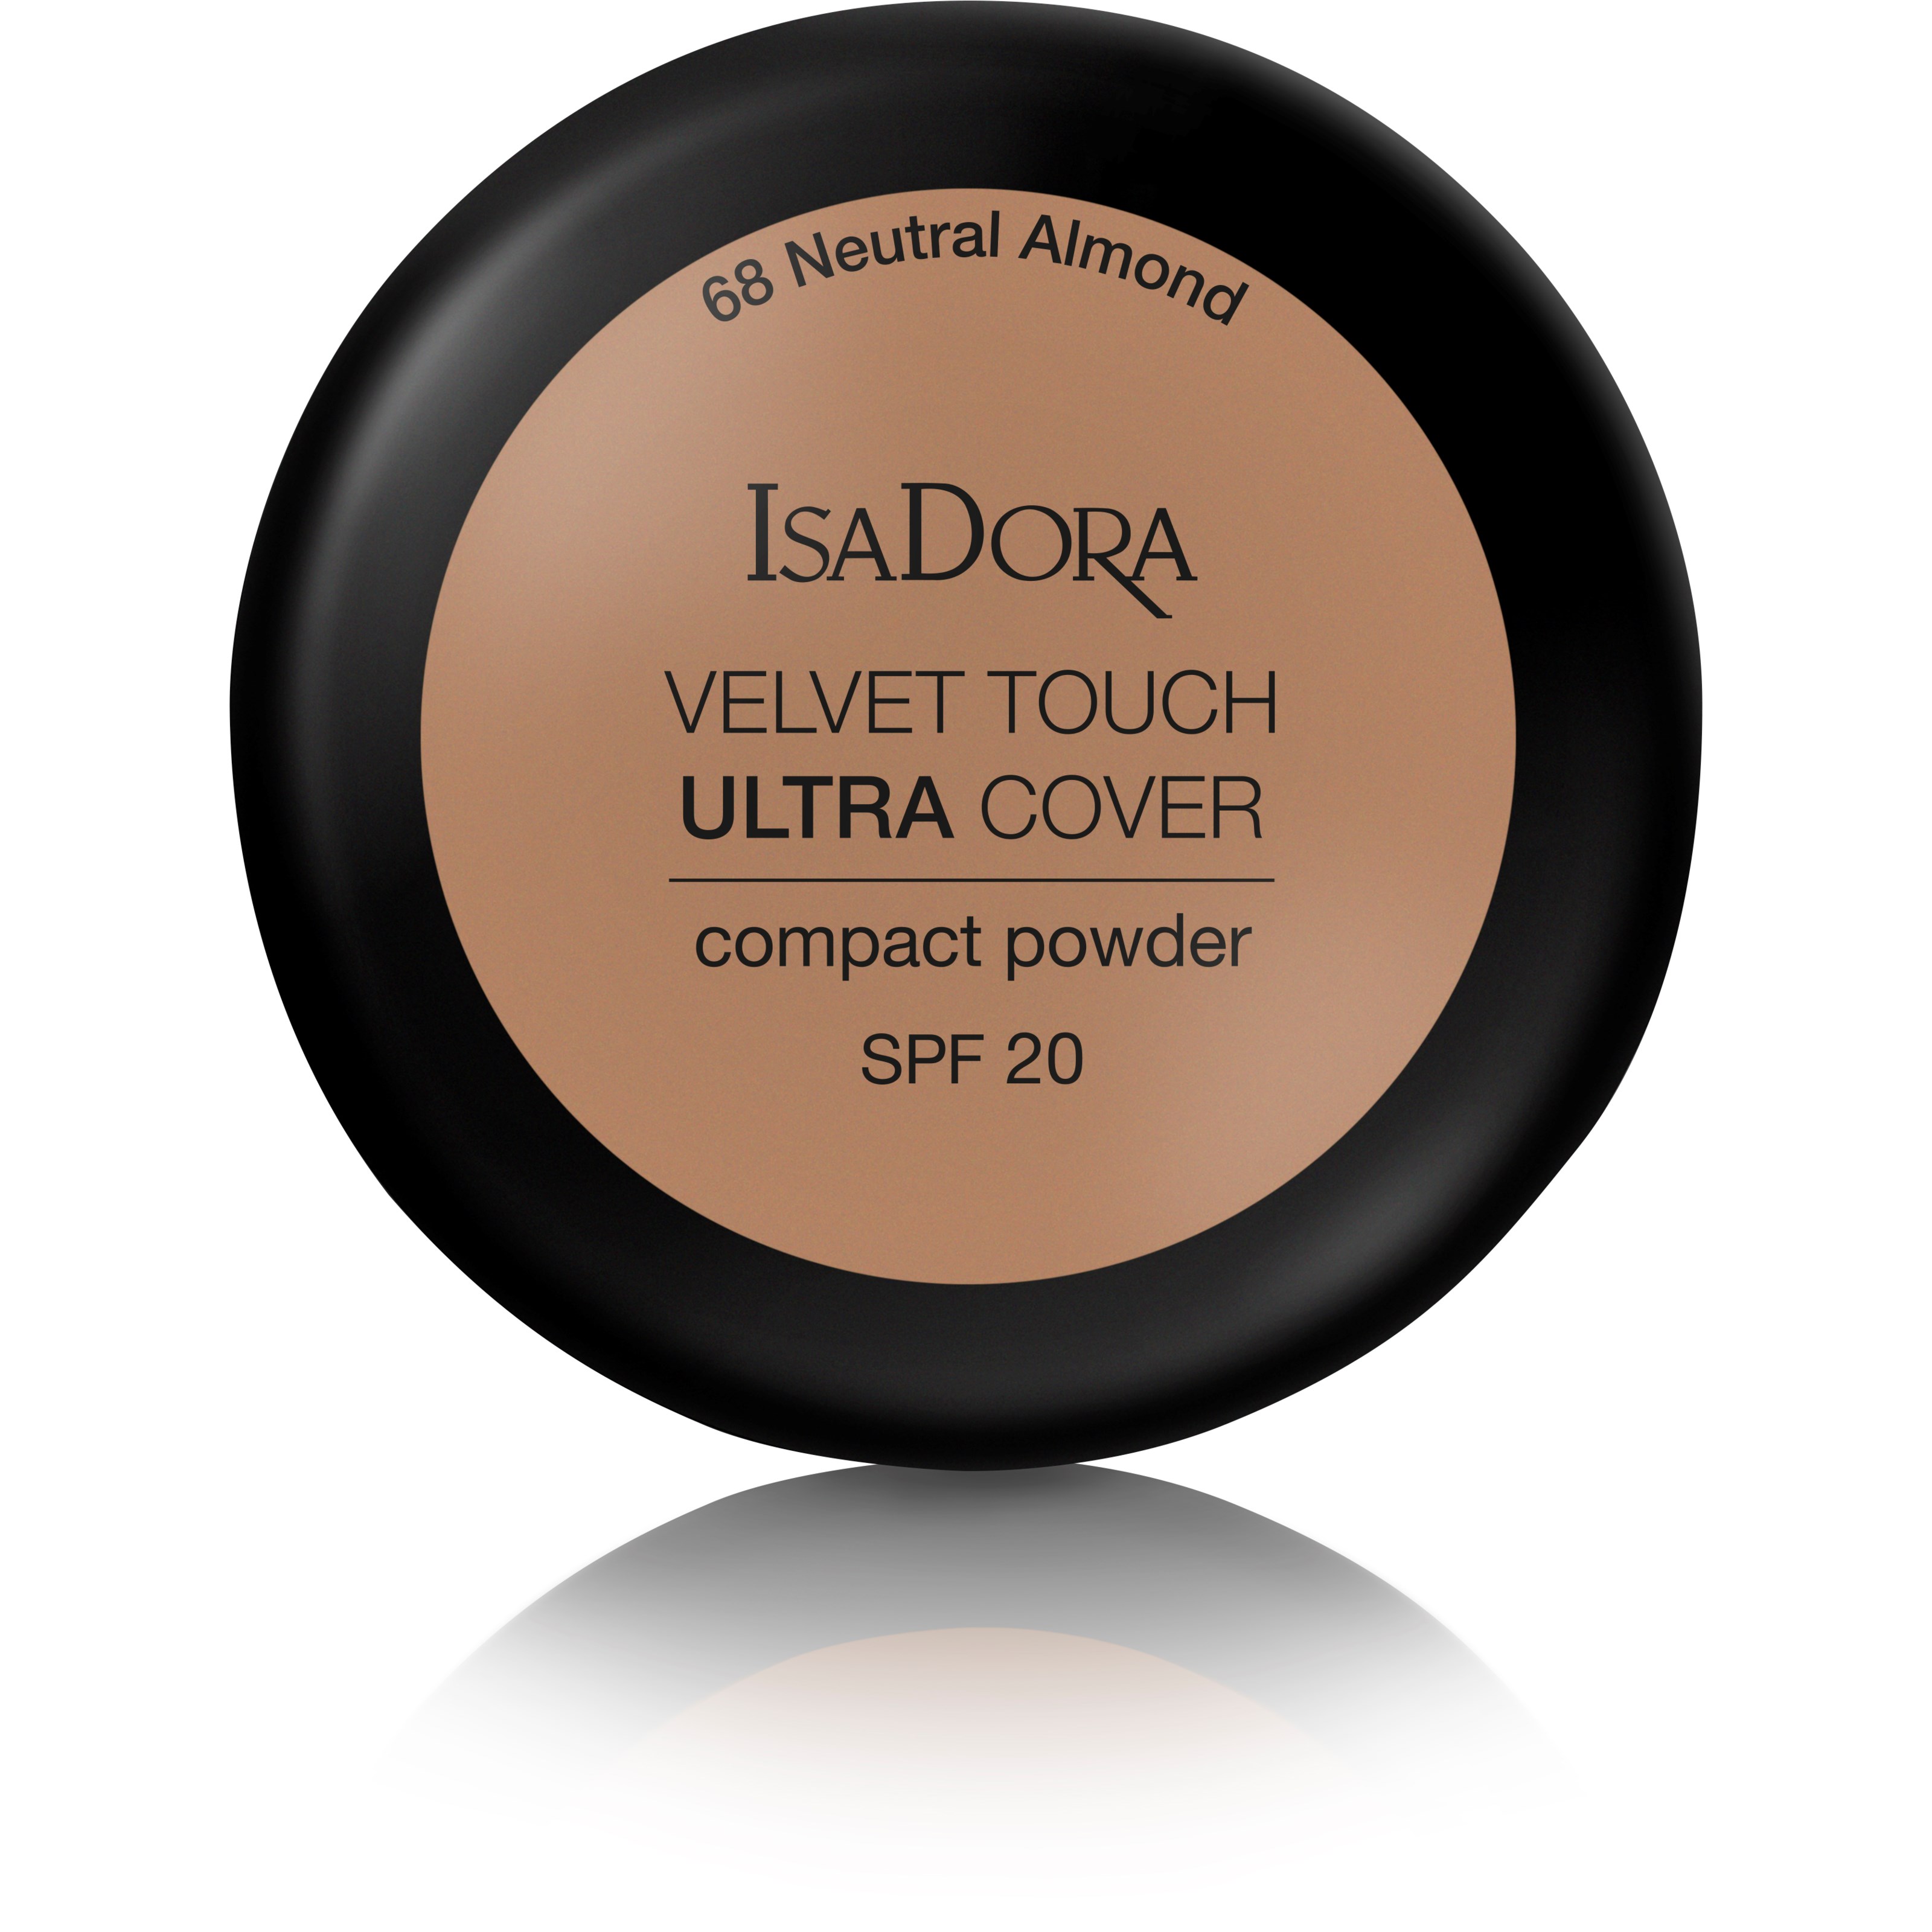 Läs mer om IsaDora Velvet Touch Ultra Cover Compact Power Spf 20 68 Neutral Almo